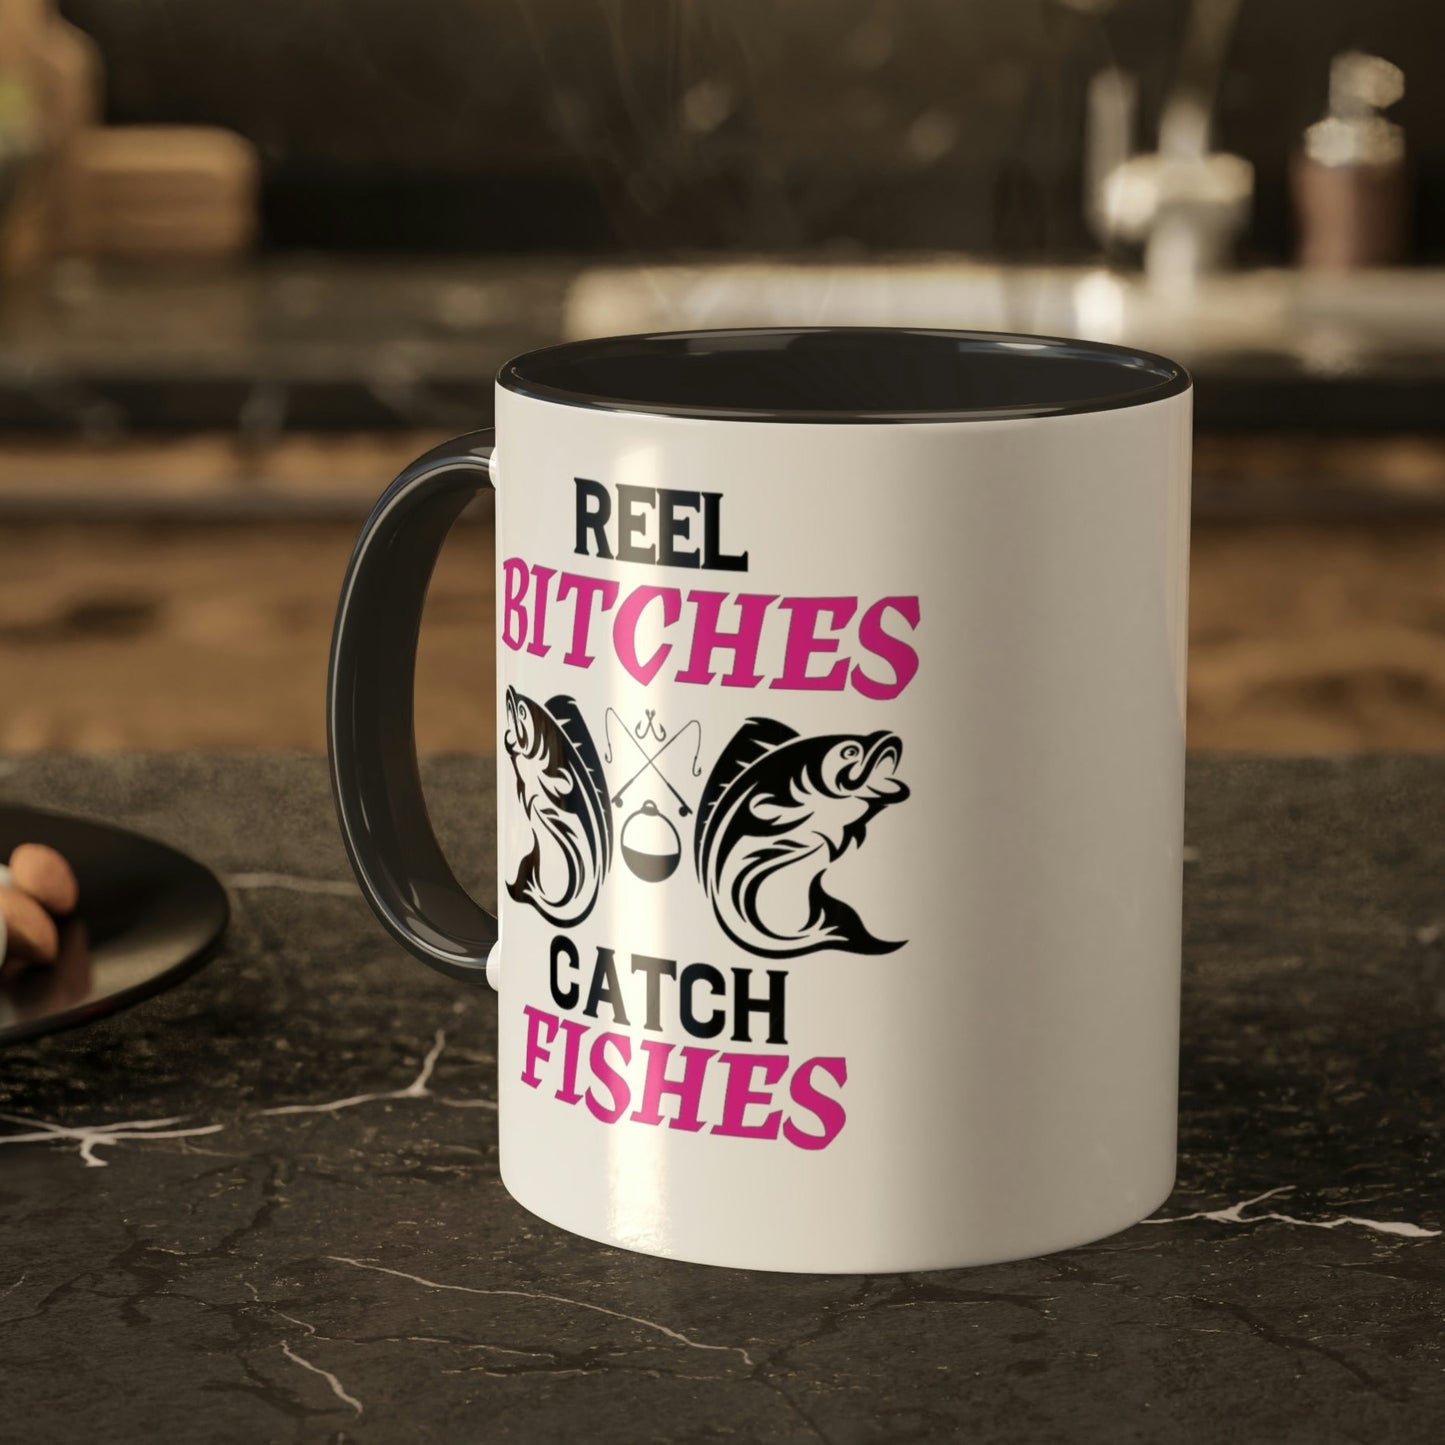 reel-bitches-catch-fishes-glossy-mug-11-oz-orca-fishing-5-coffee